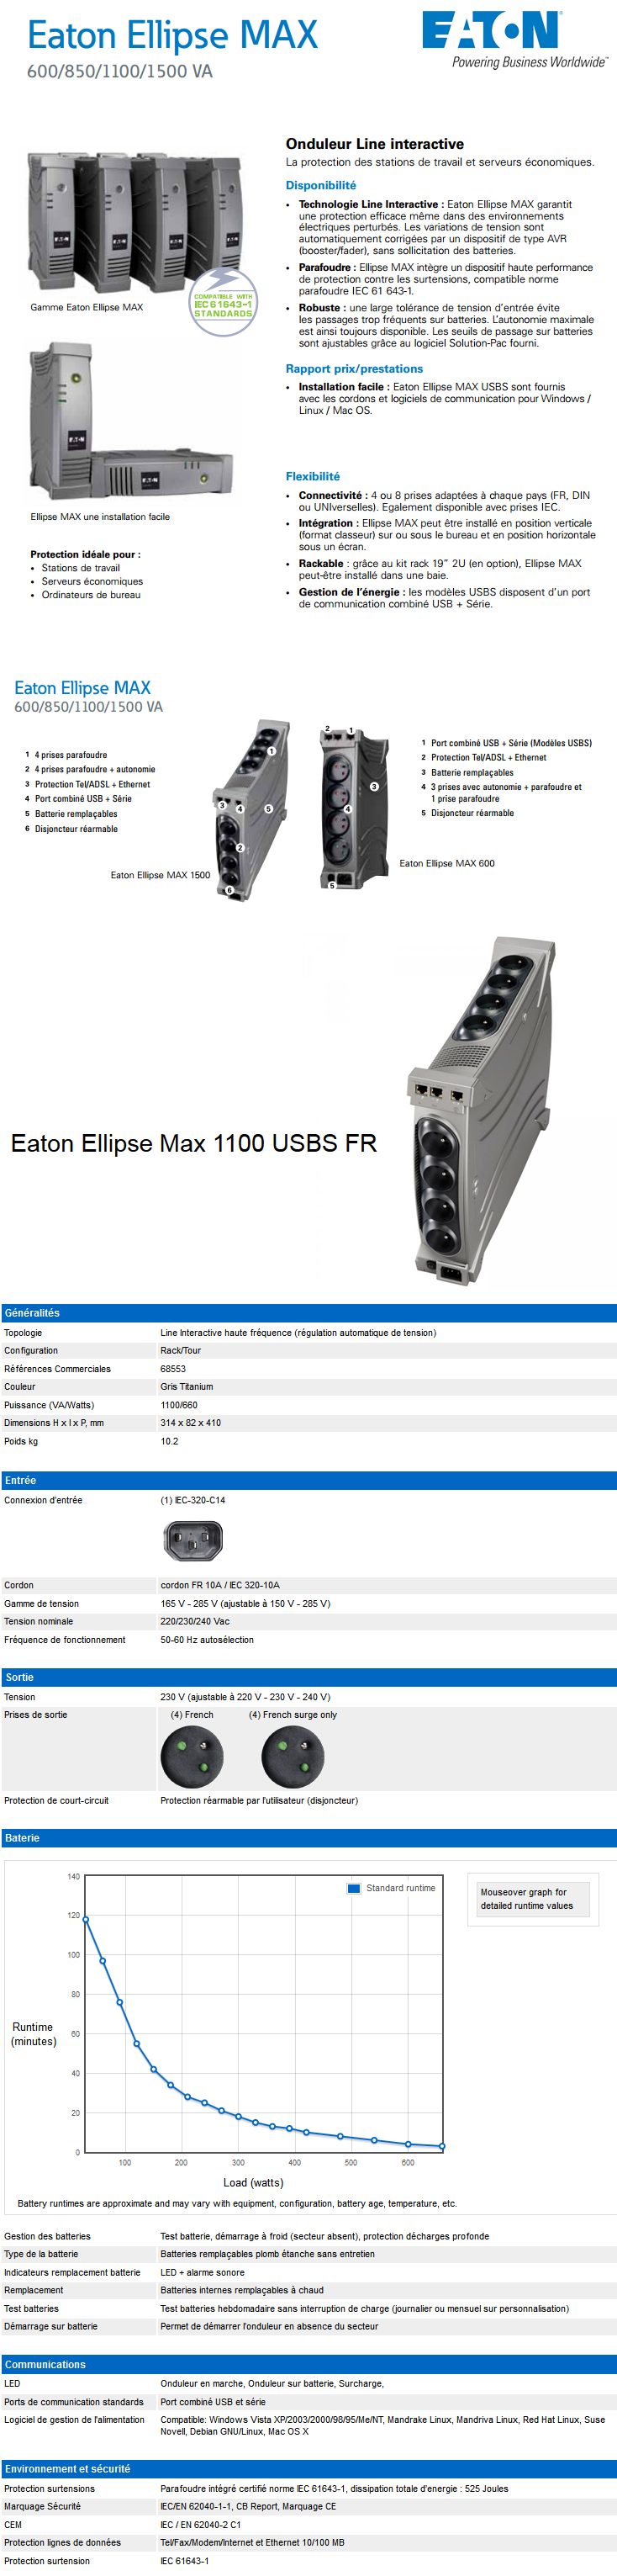 Onduleur Line Interactive Eaton Ellipse MAX USBS 1100 FR prix Maroc